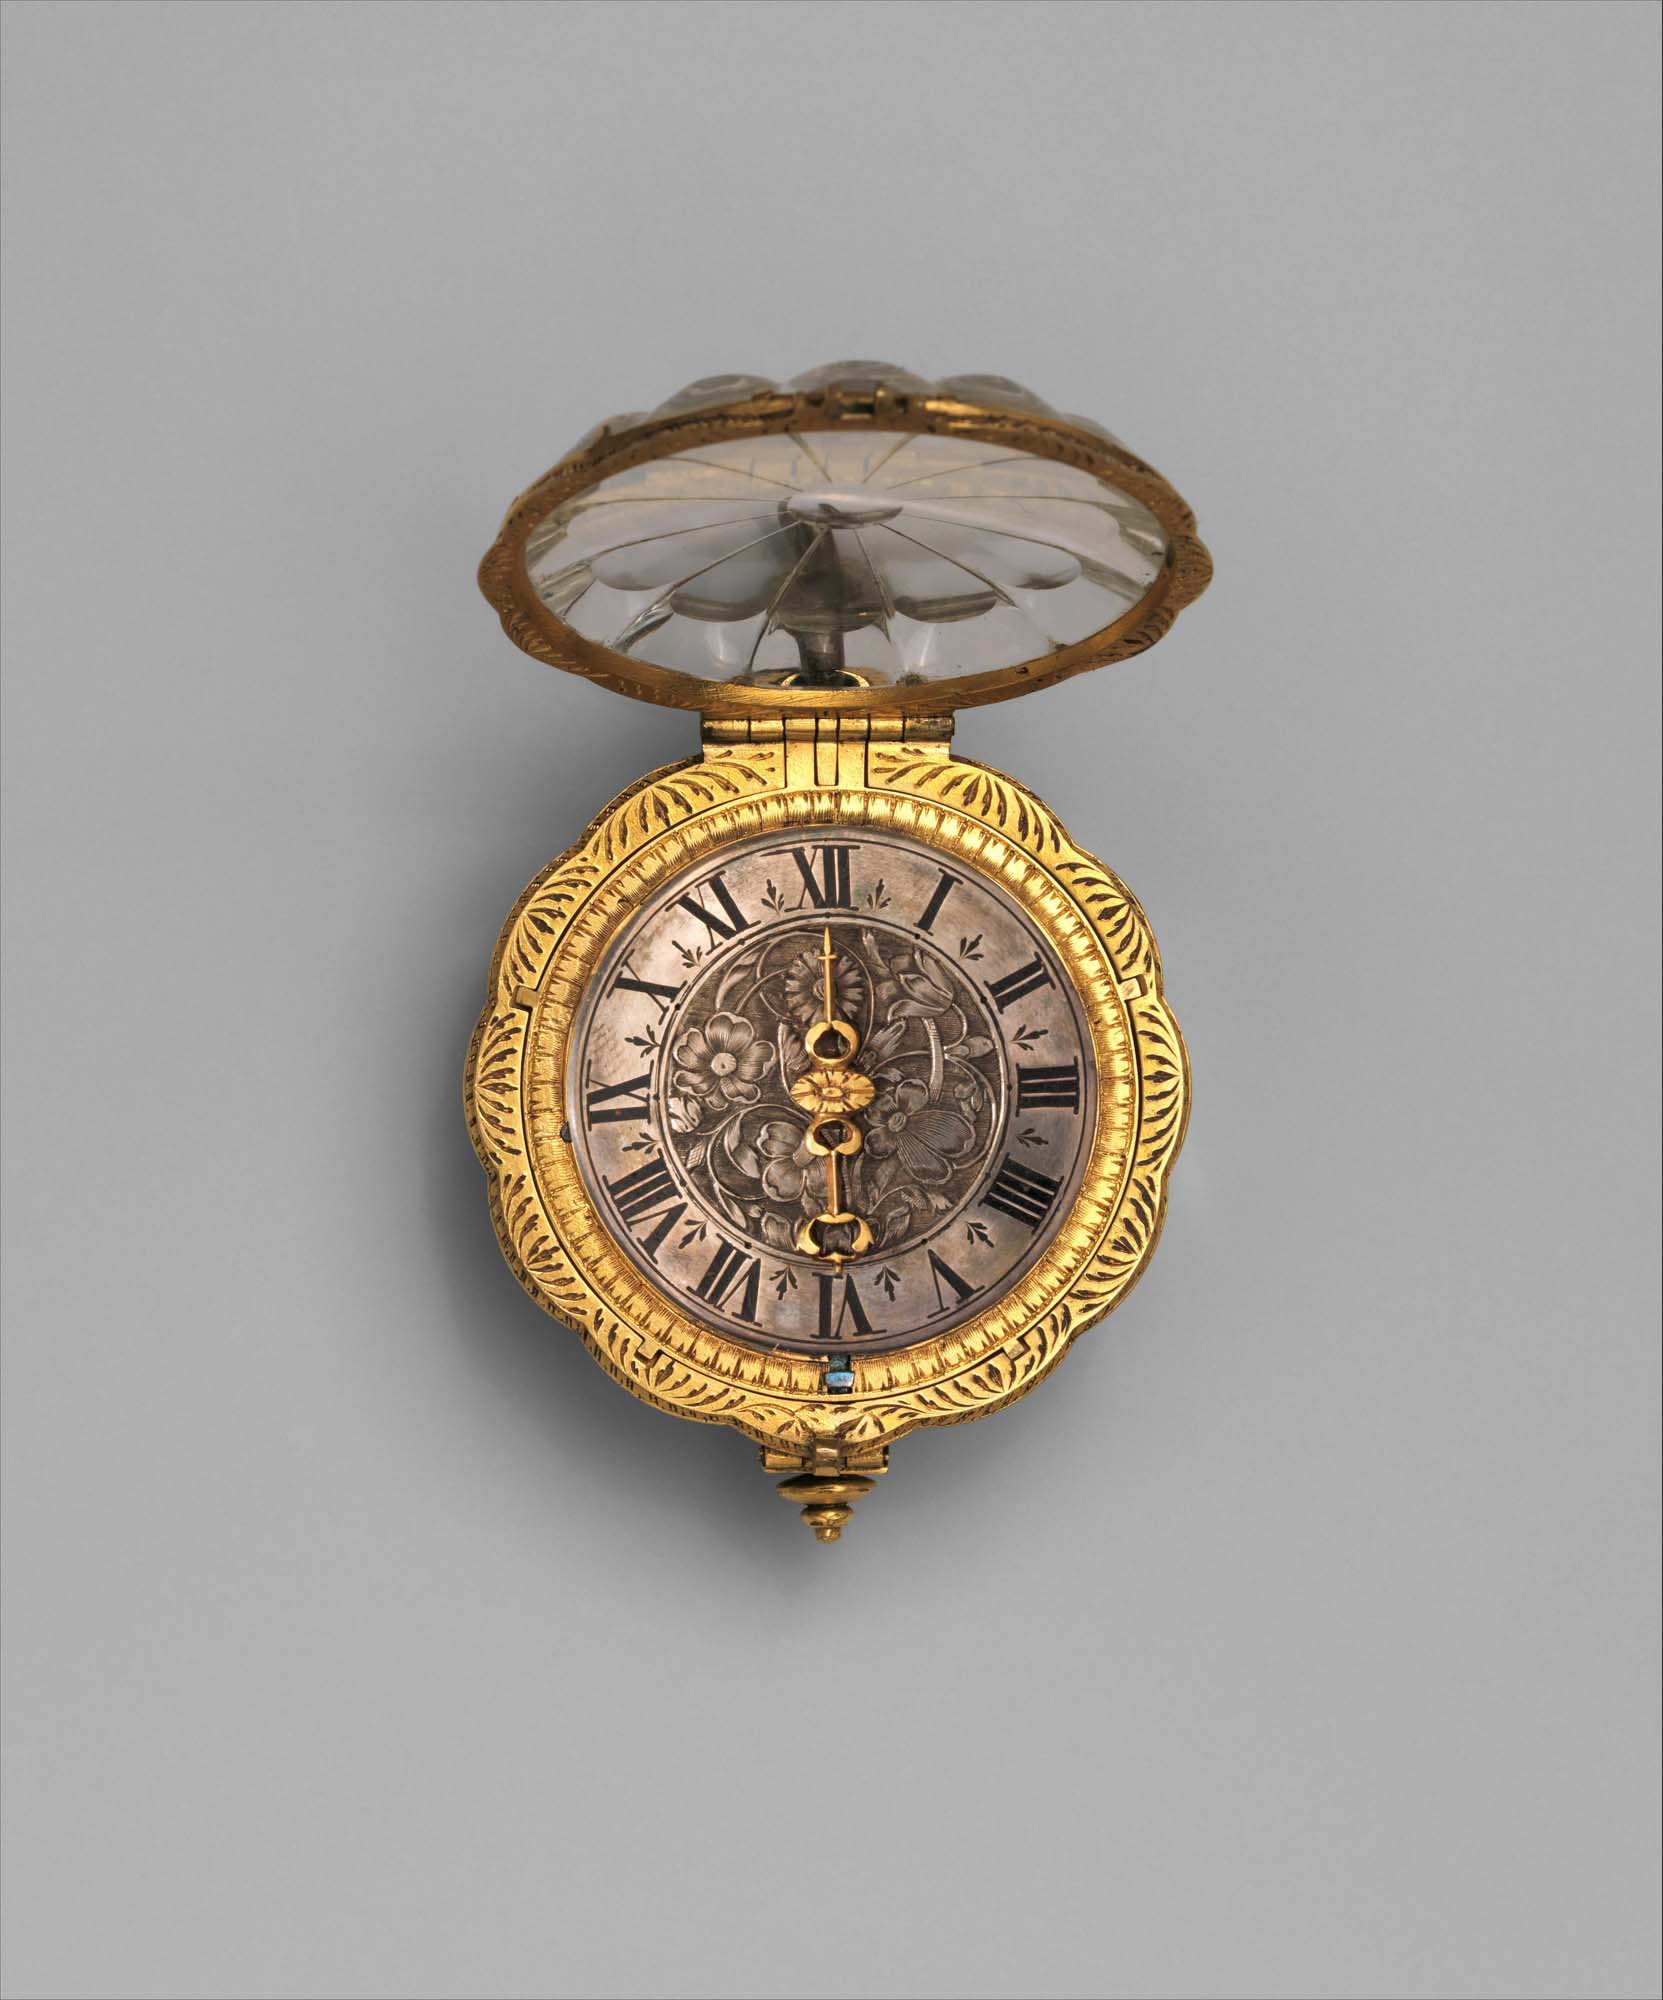 Rock Crystal Mounted in Gilded Brass Watch by Jean Rousseau (ca. 1650 – 60)